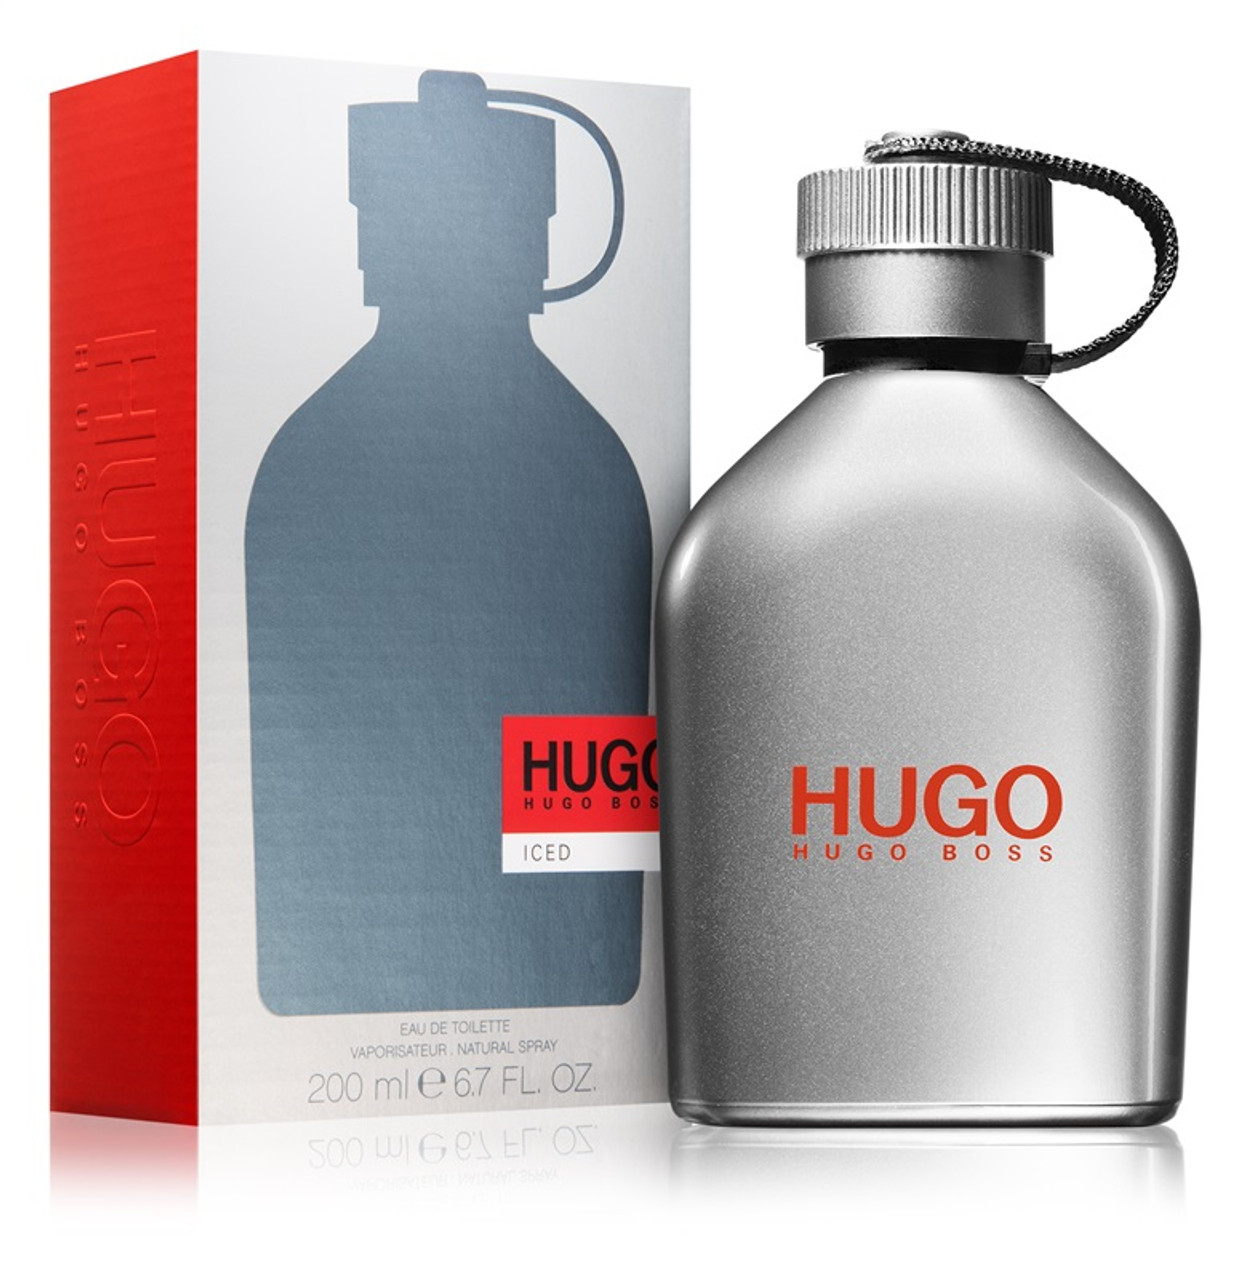 Boss hugo boss описание аромата. Hugo Boss Iced men 125ml EDT. Hugo Boss Iced men 75ml EDT. Hugo Boss Iced 75ml. Hugo Boss Hugo Iced мужской 125.